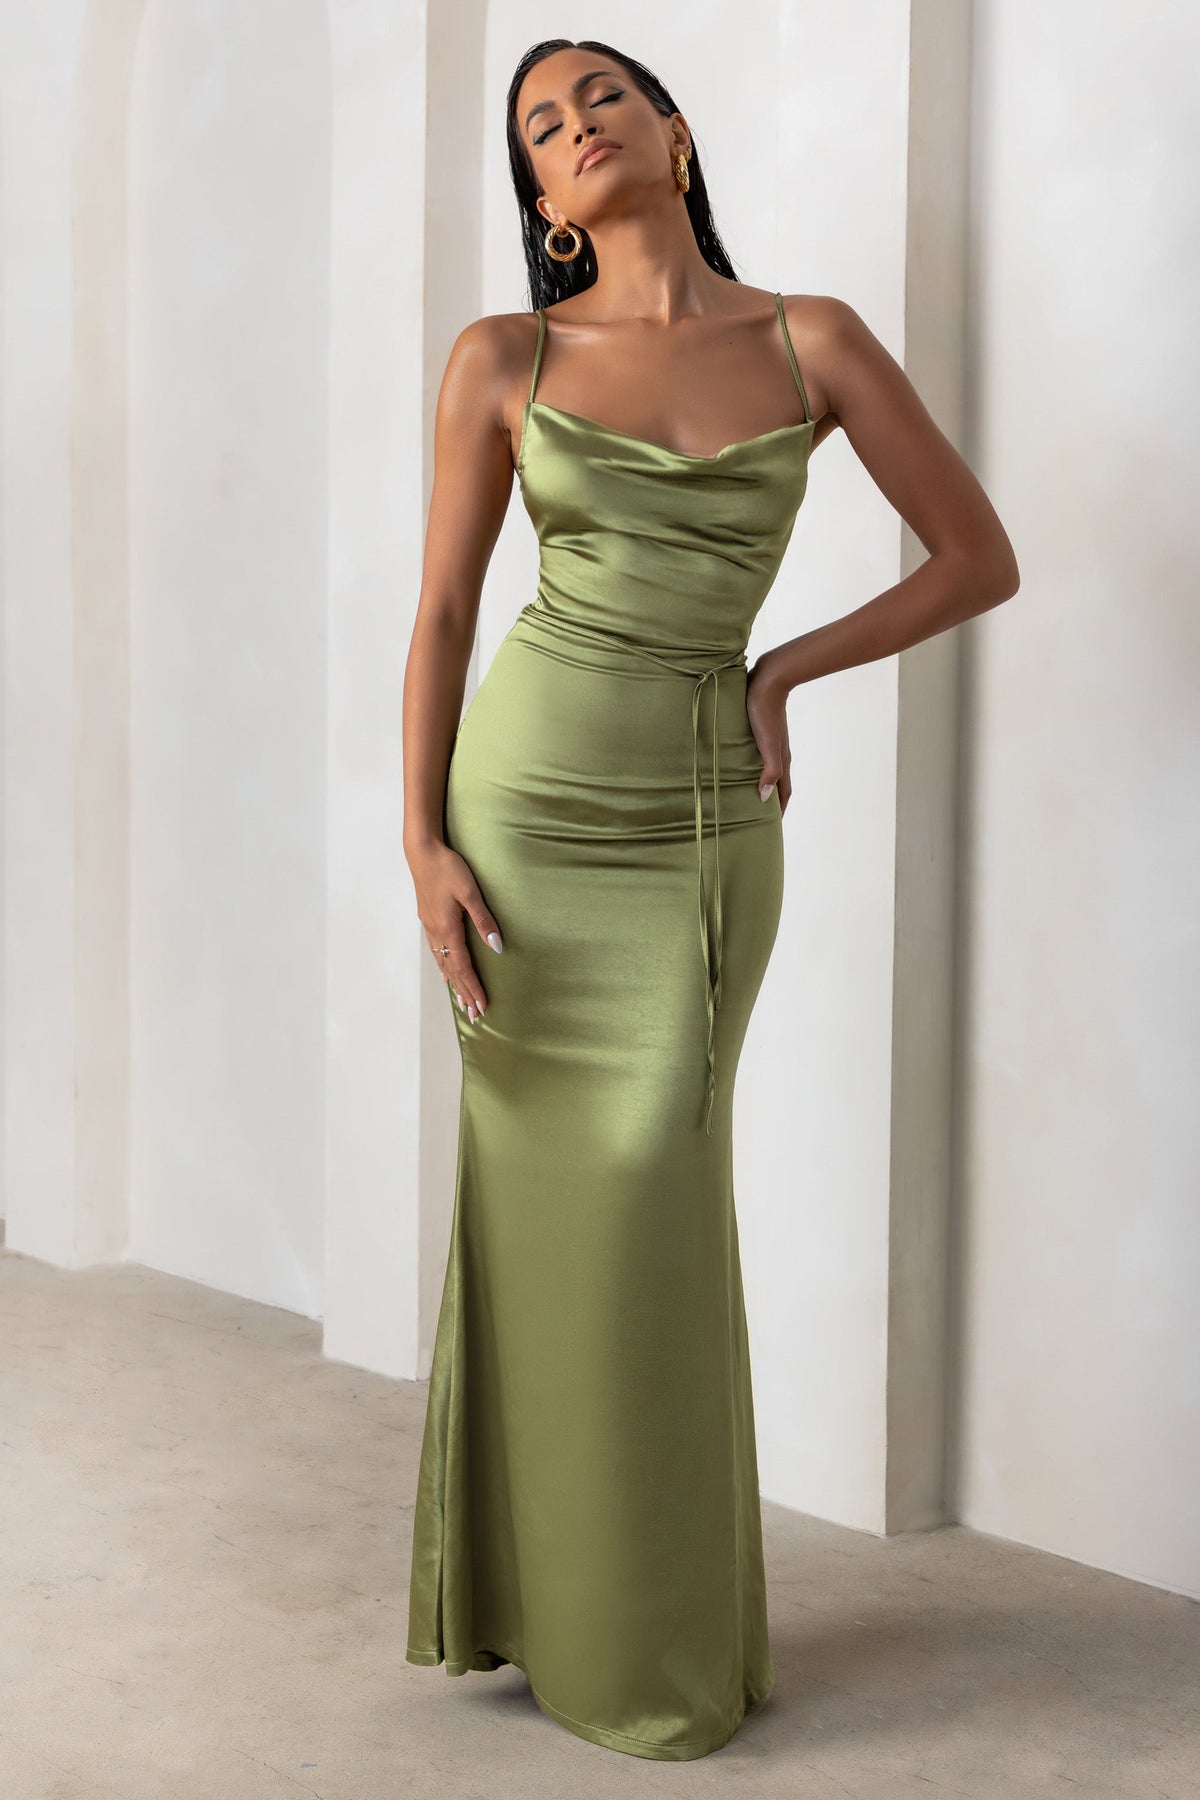 Silk Dresses US, Buy Satin Dresses Online